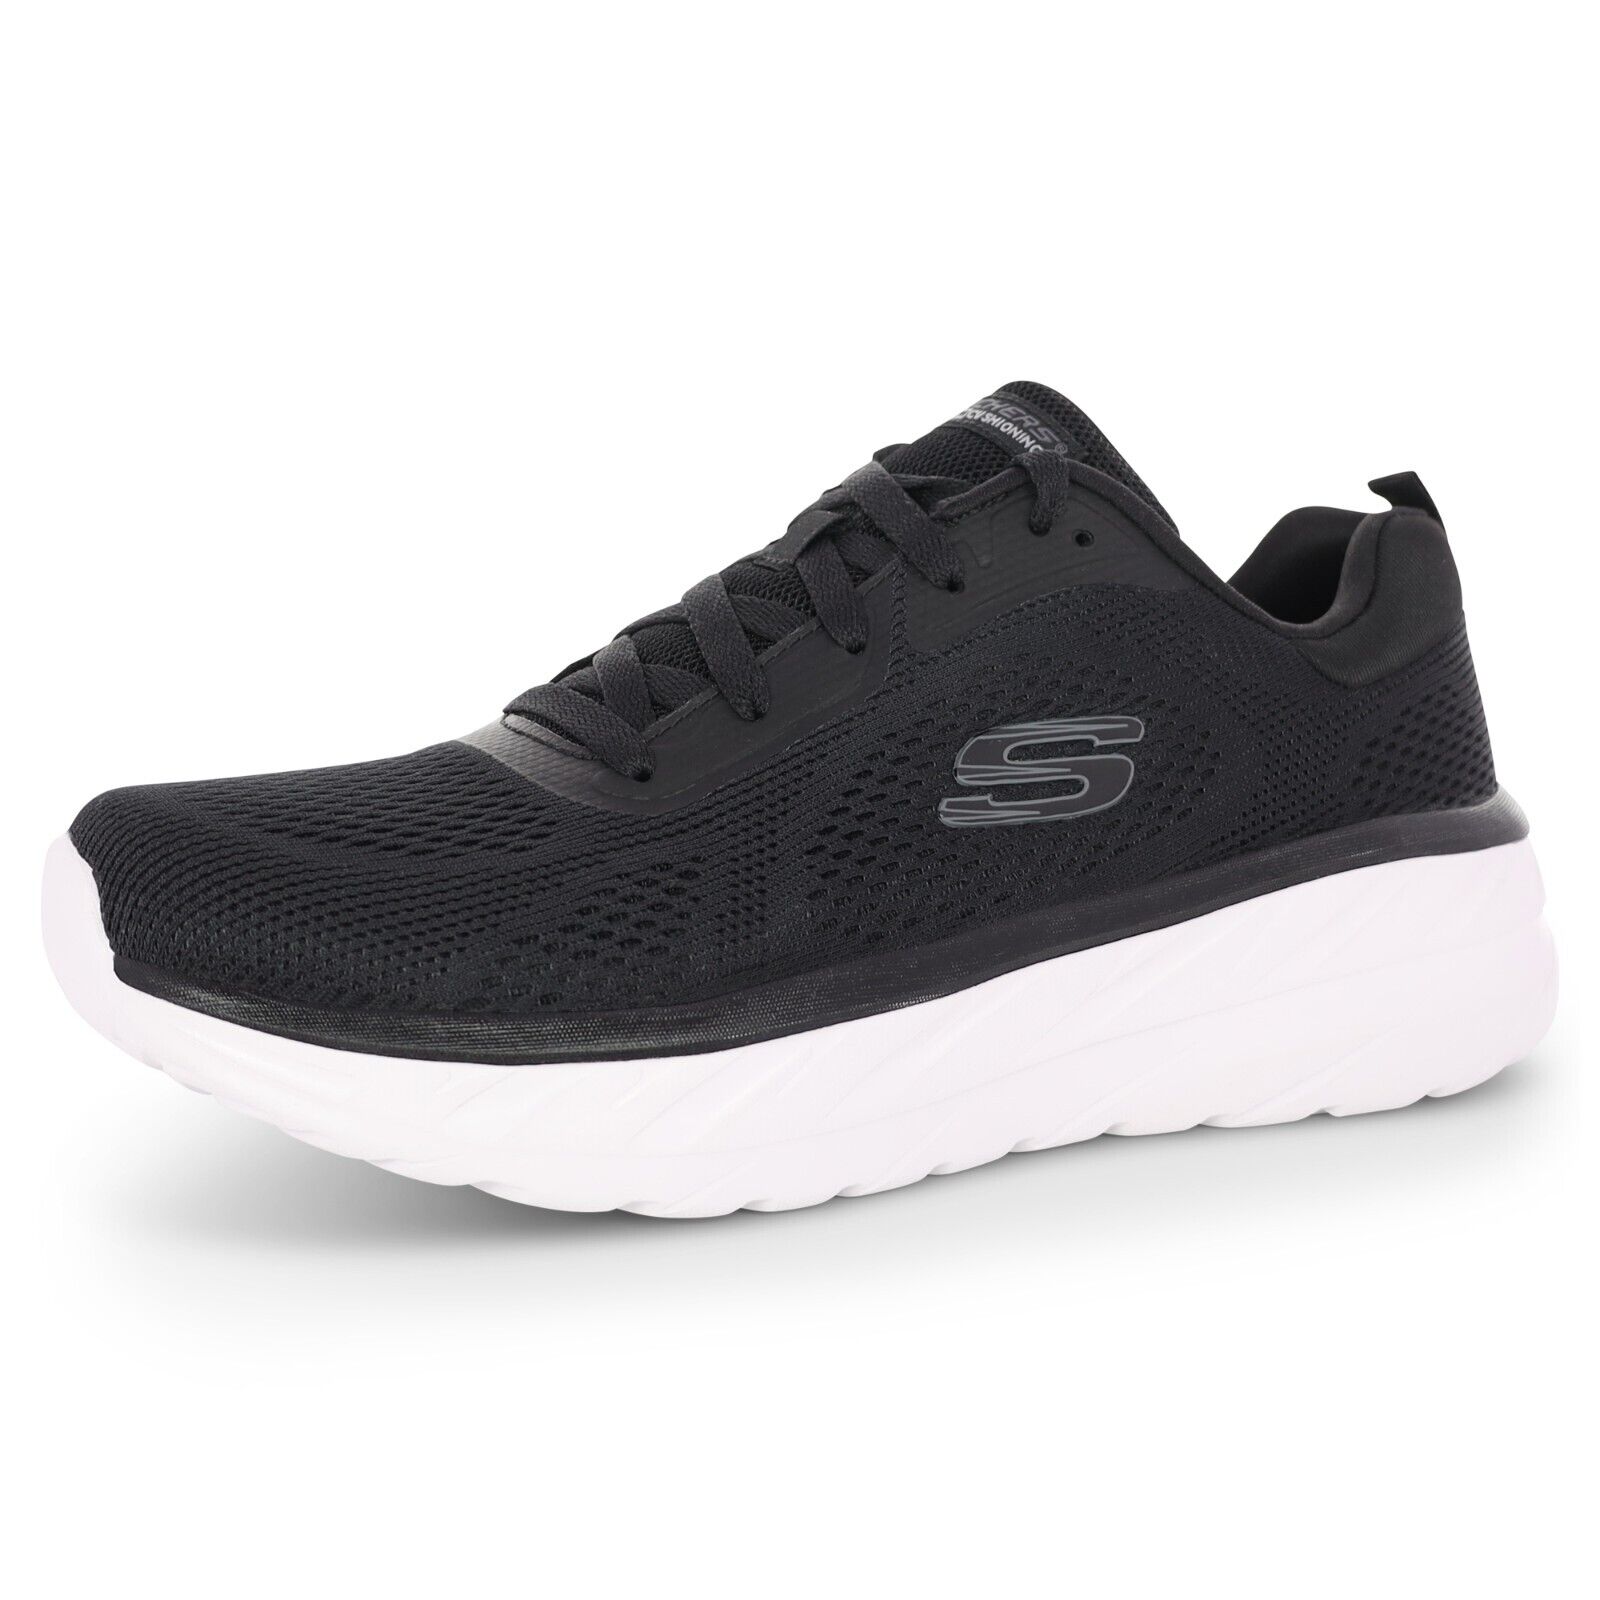 Skechers Men's D'Lux Ultra Sneaker Comfortable Super Lightweight Shoe Size 9 -13